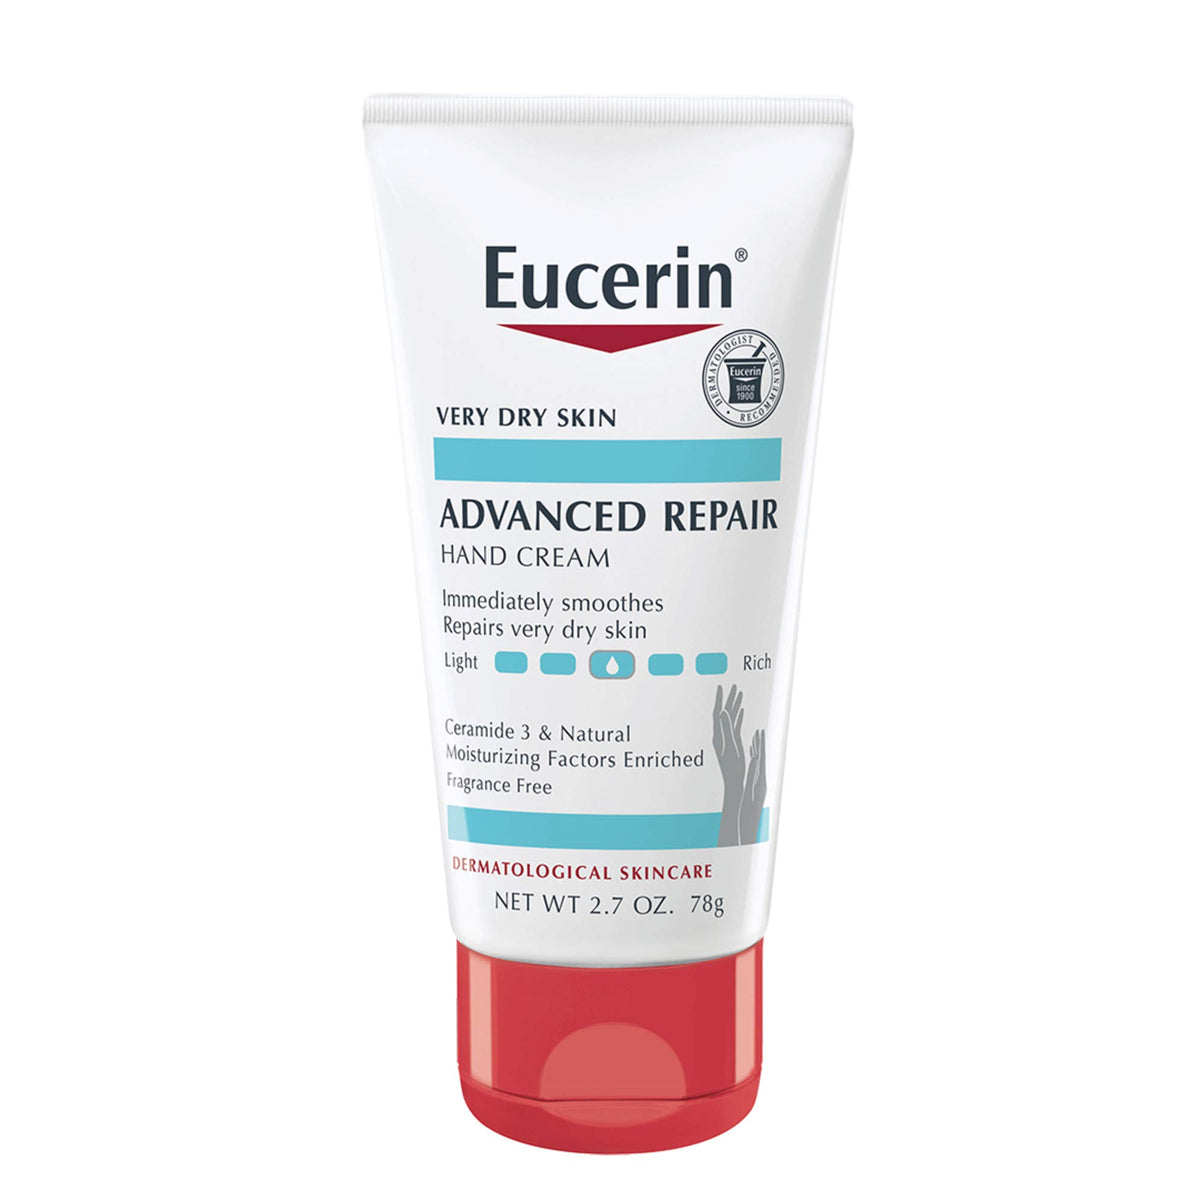 Eucerin Advanced Repair Hand Cream for very dry skin 2.7 oz